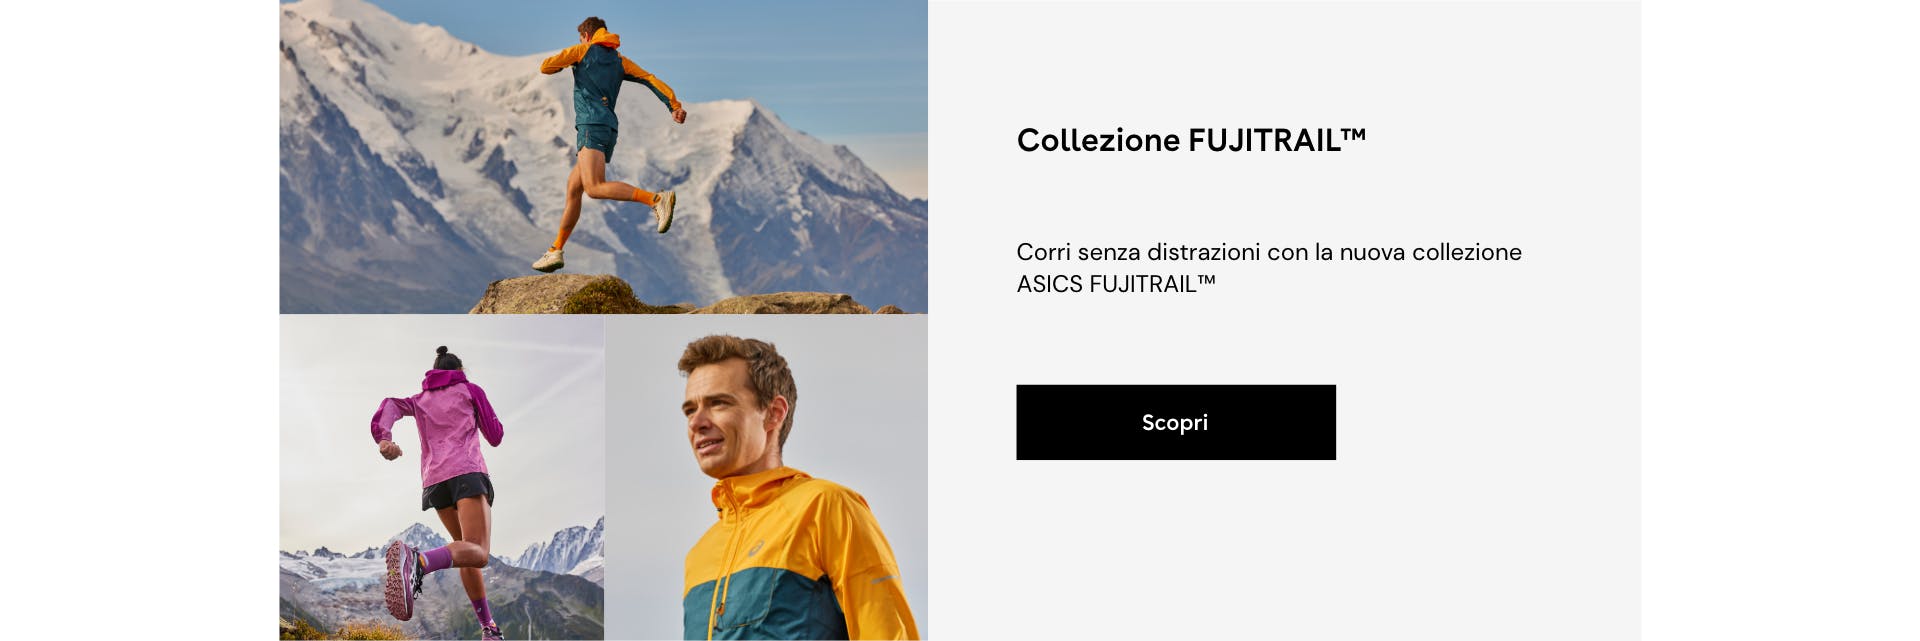 Fujitrail Collection